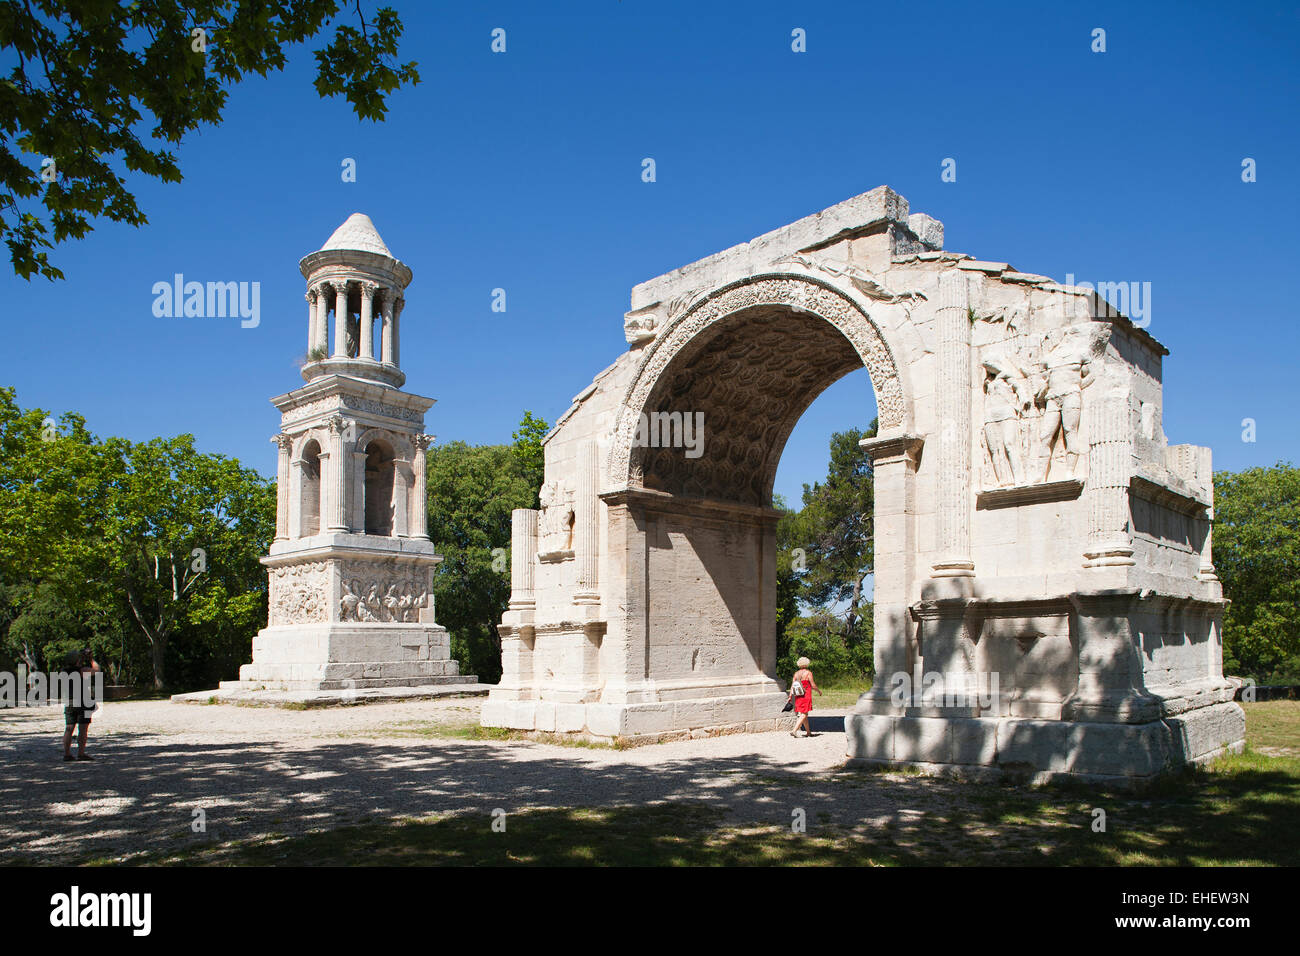 Mausoleo y arco triunfal; glanum sitio arqueológico, Saint Remy de Provence, les Alpilles, área de Provence, Francia, Europa Foto de stock